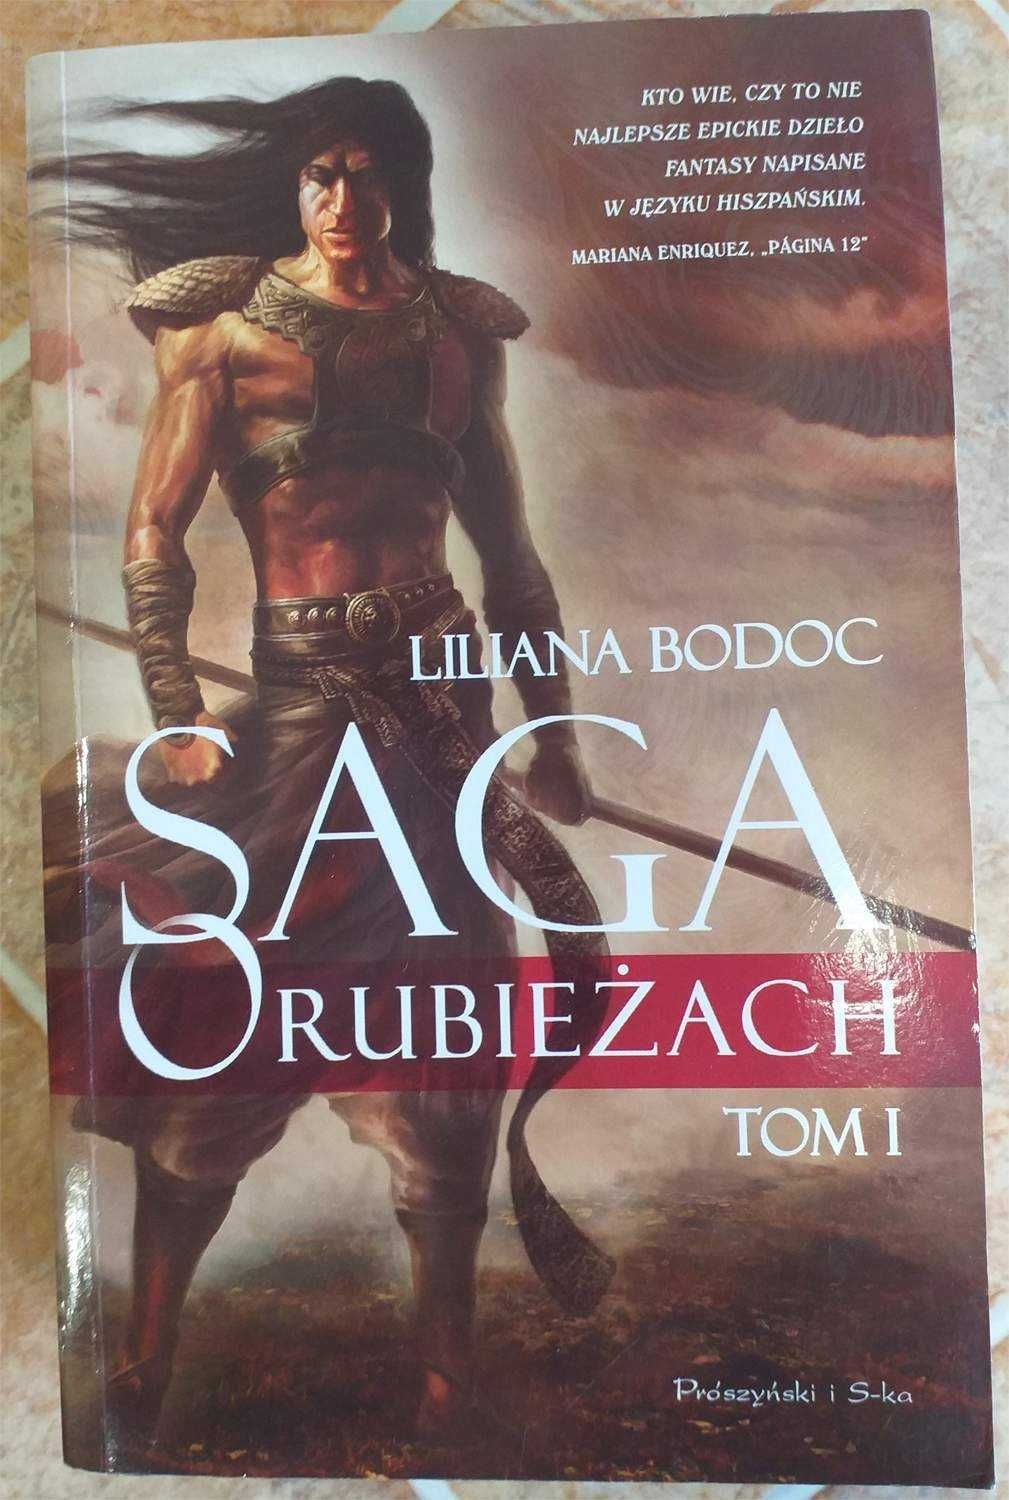 Saga o Rubieżach, tom 1 - Liliana Bodoc